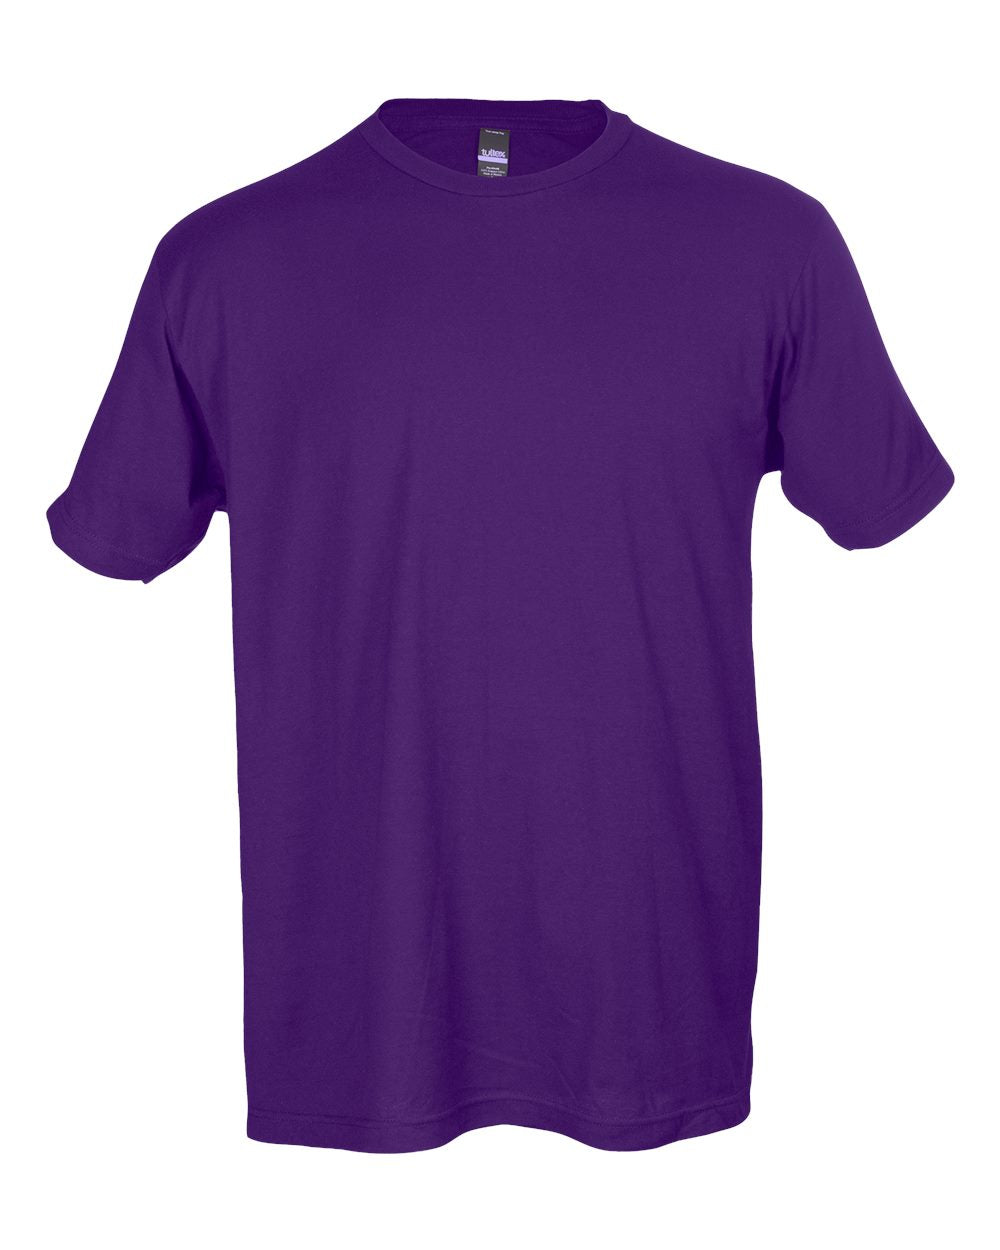 Pretreated Tultex 202 Unisex Fine Jersey T-Shirt - Purple